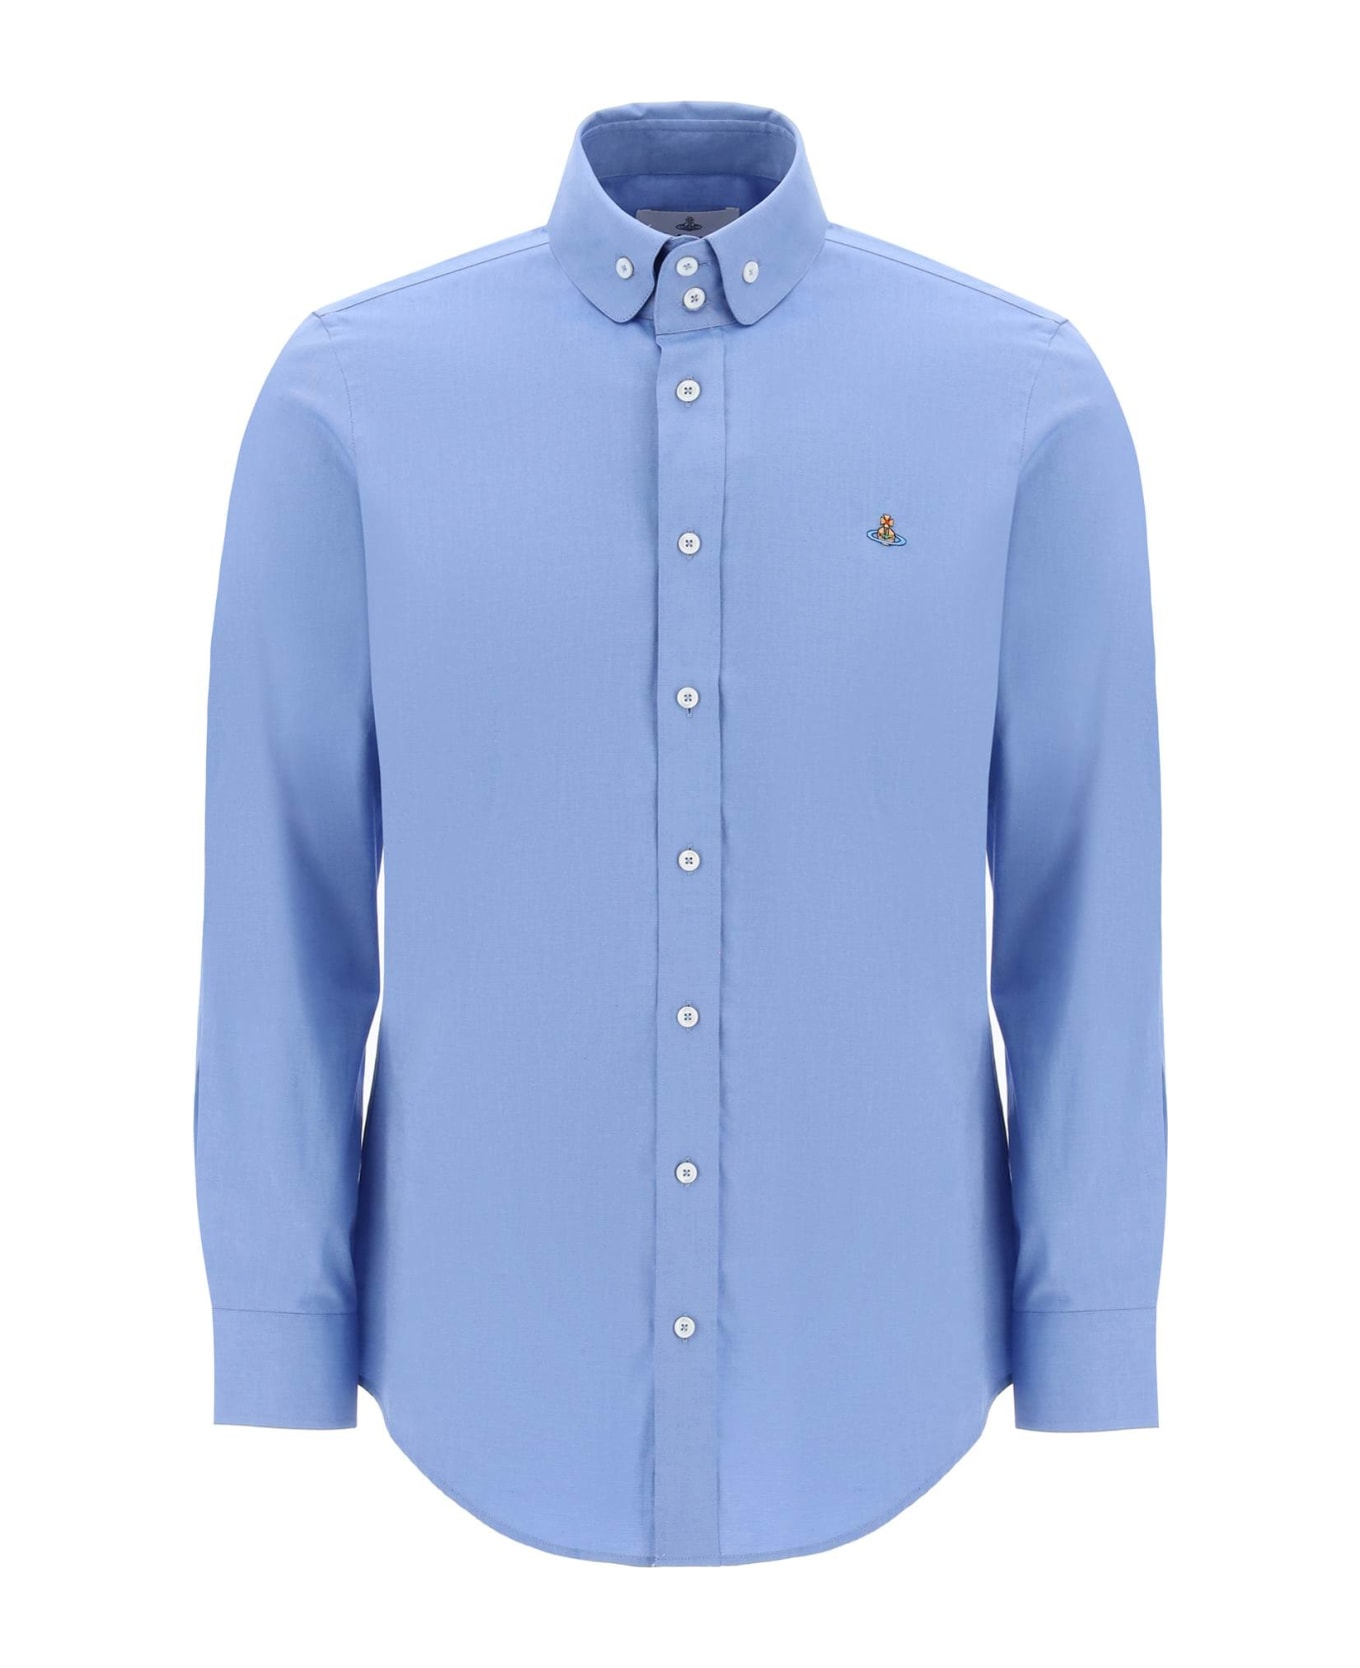 Vivienne Westwood Two Button Krall Shirt - BLUE (Blue)